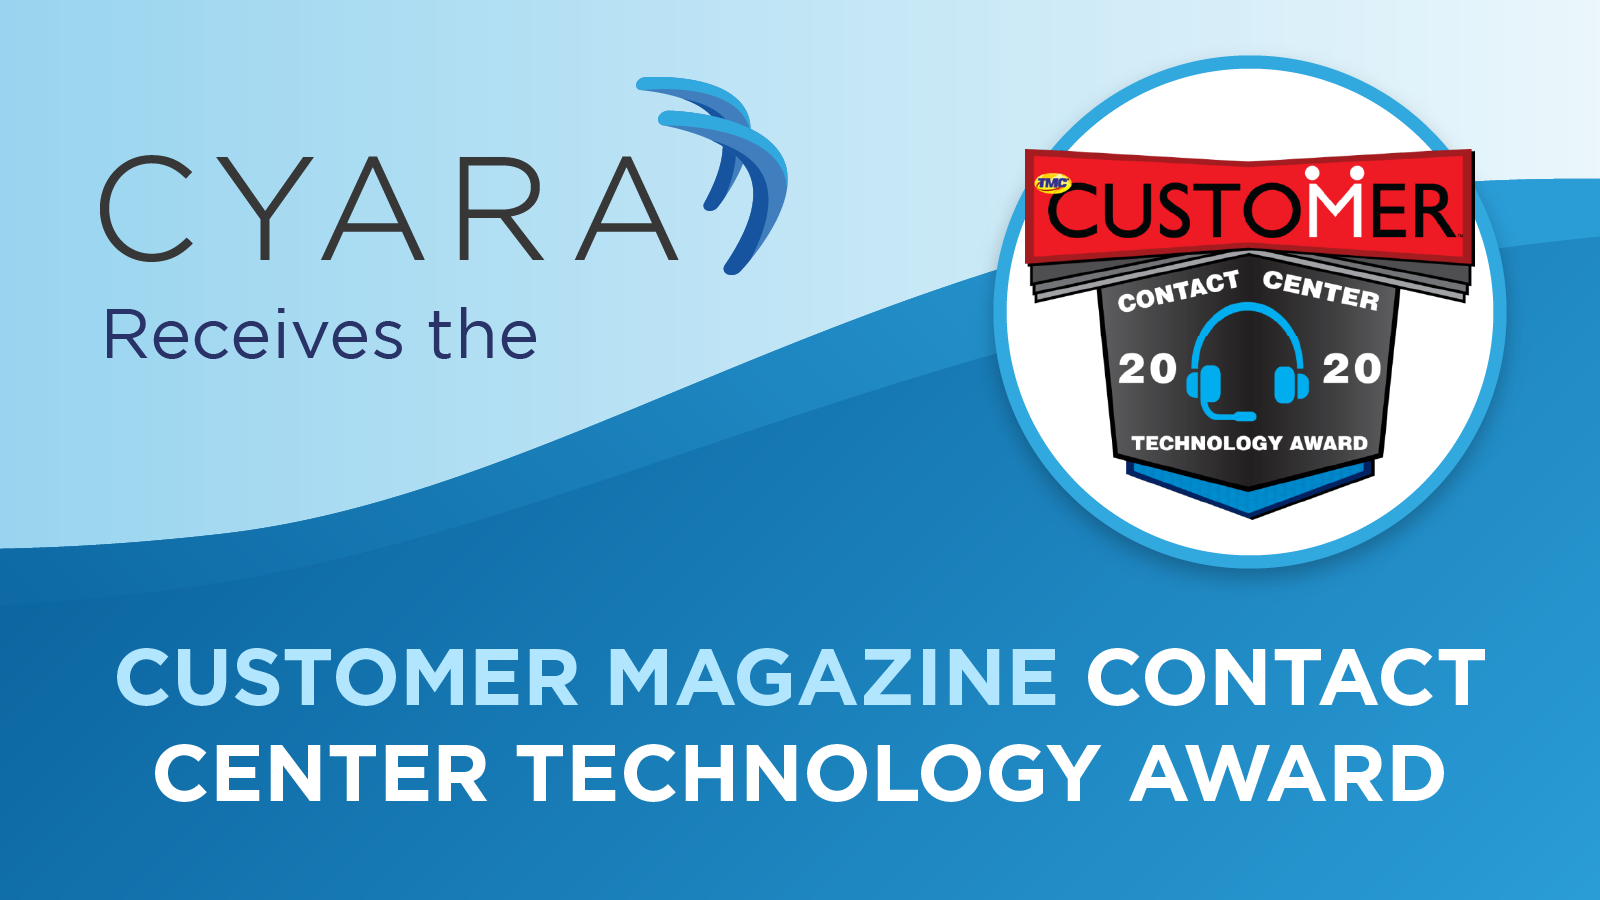 Cyara receives the Customer Magazine contact center technology award